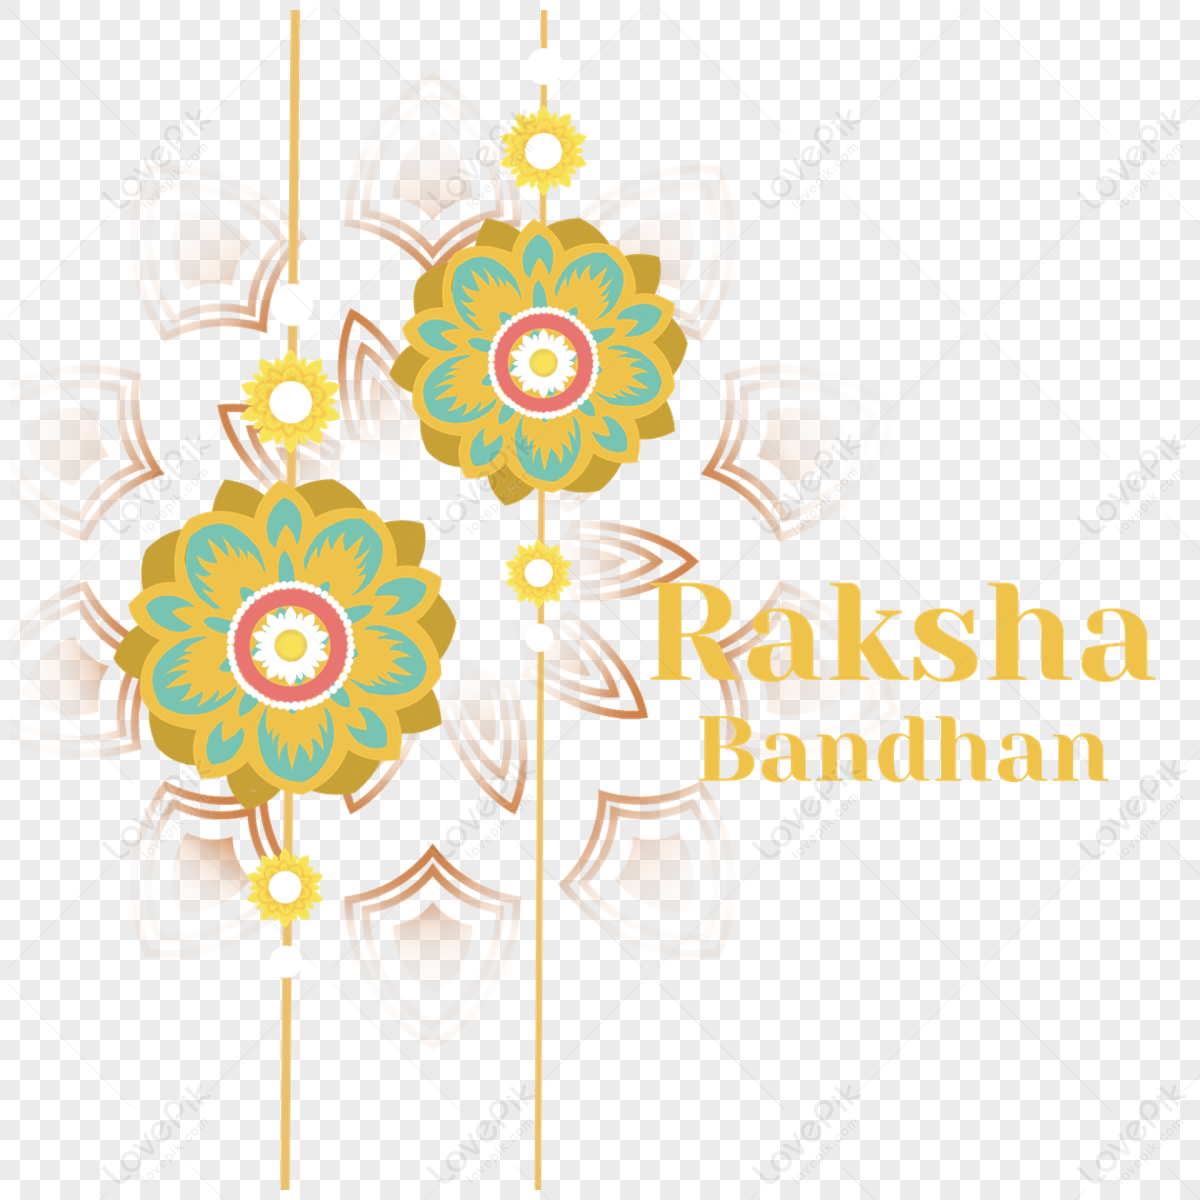 Rakhi raksha bandhan indian festival Royalty Free Vector